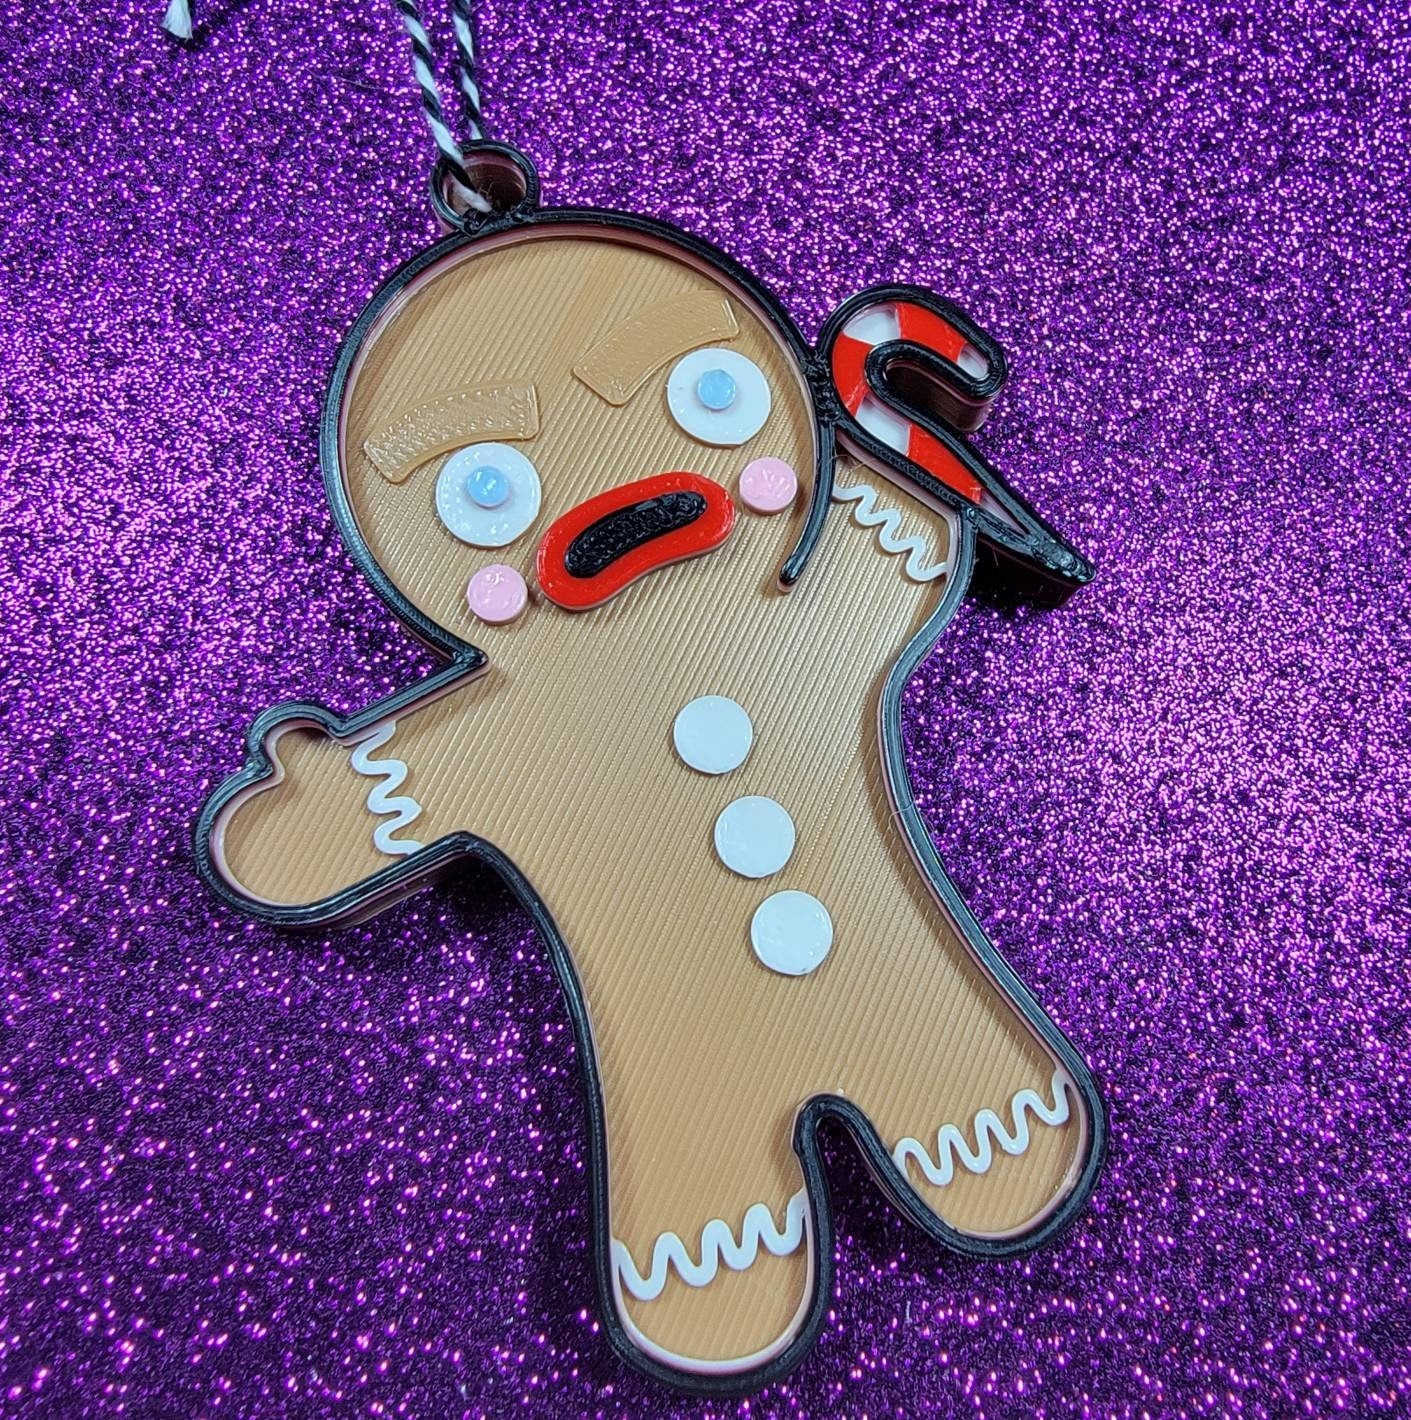 Evil Gingerbread Man 3D Printed Spooky Christmas Ornament